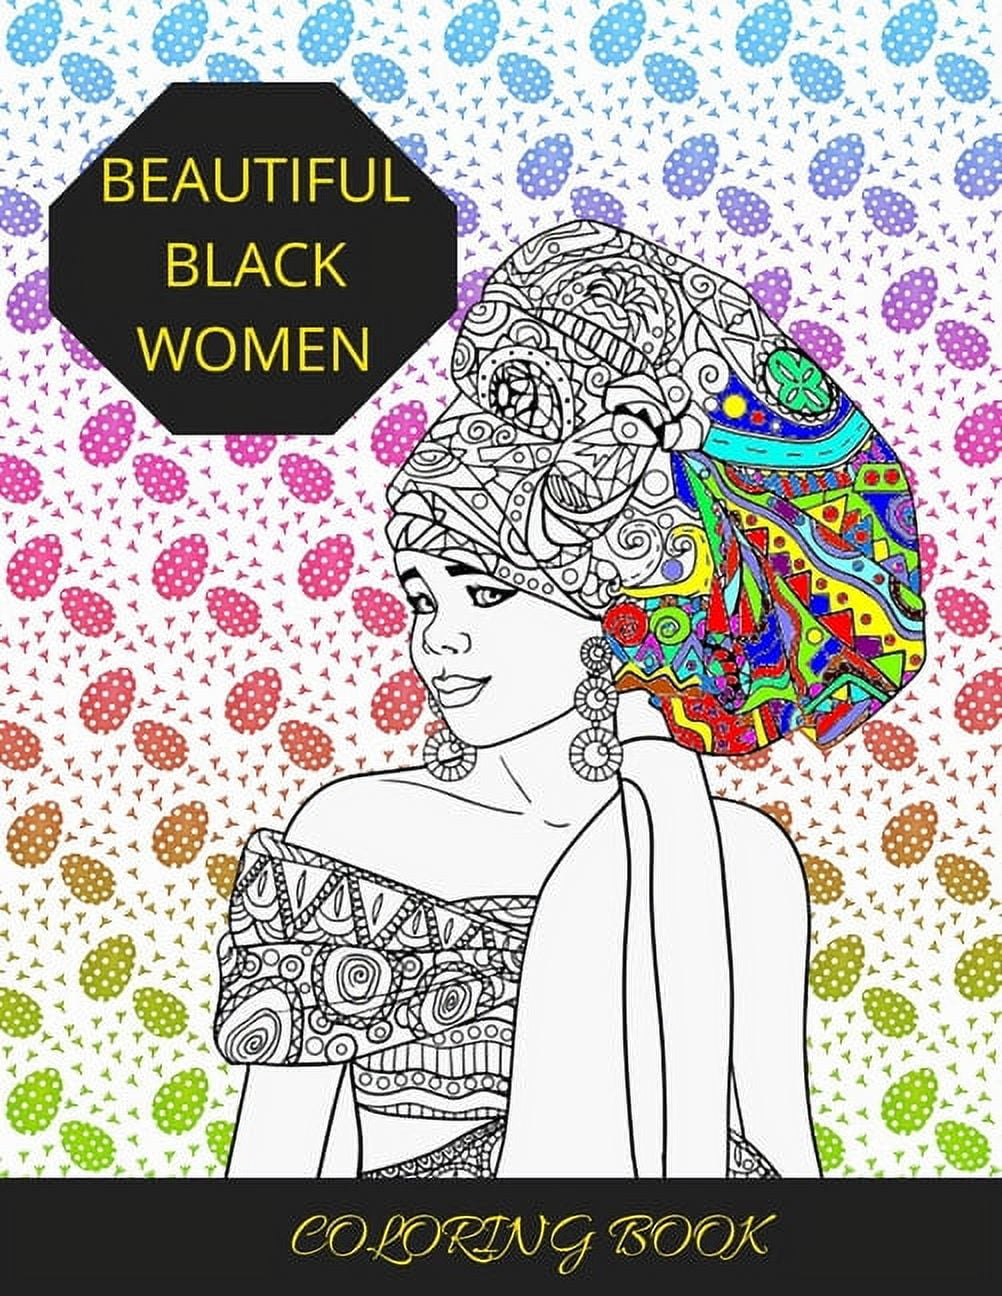 My Life - Black Women Enjoying Life and Hobbies - Coloring Book: Inspiring  Illustrations of African American Women Living their Lives: Enjoying a